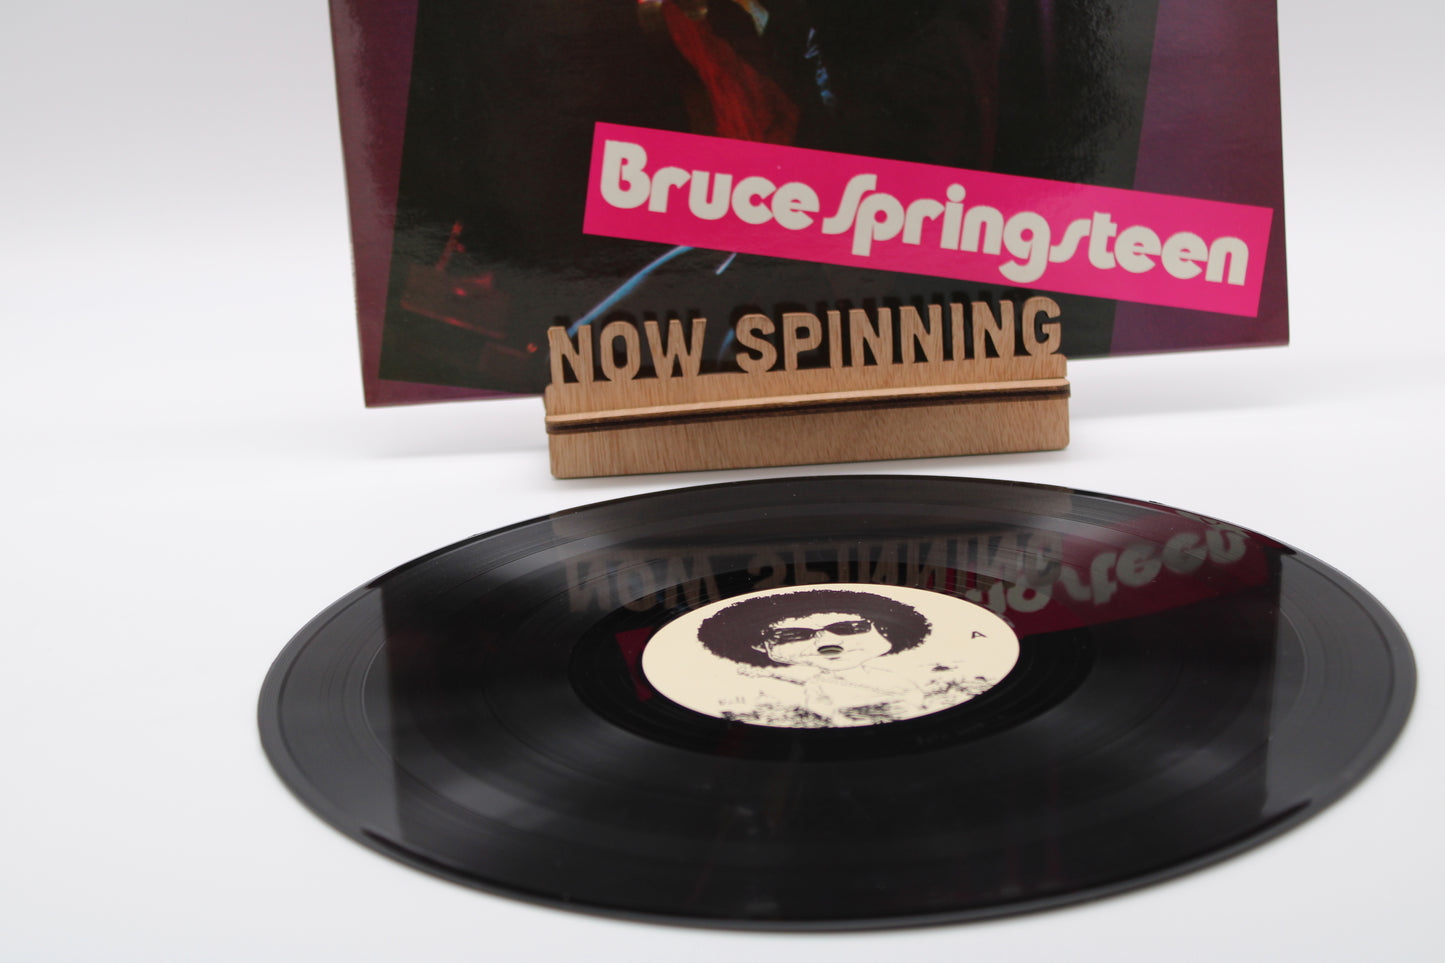 Bruce Springsteen - I'm A Rocker - Live in Toronto 1981 - Unofficial Color Vinyl BLV